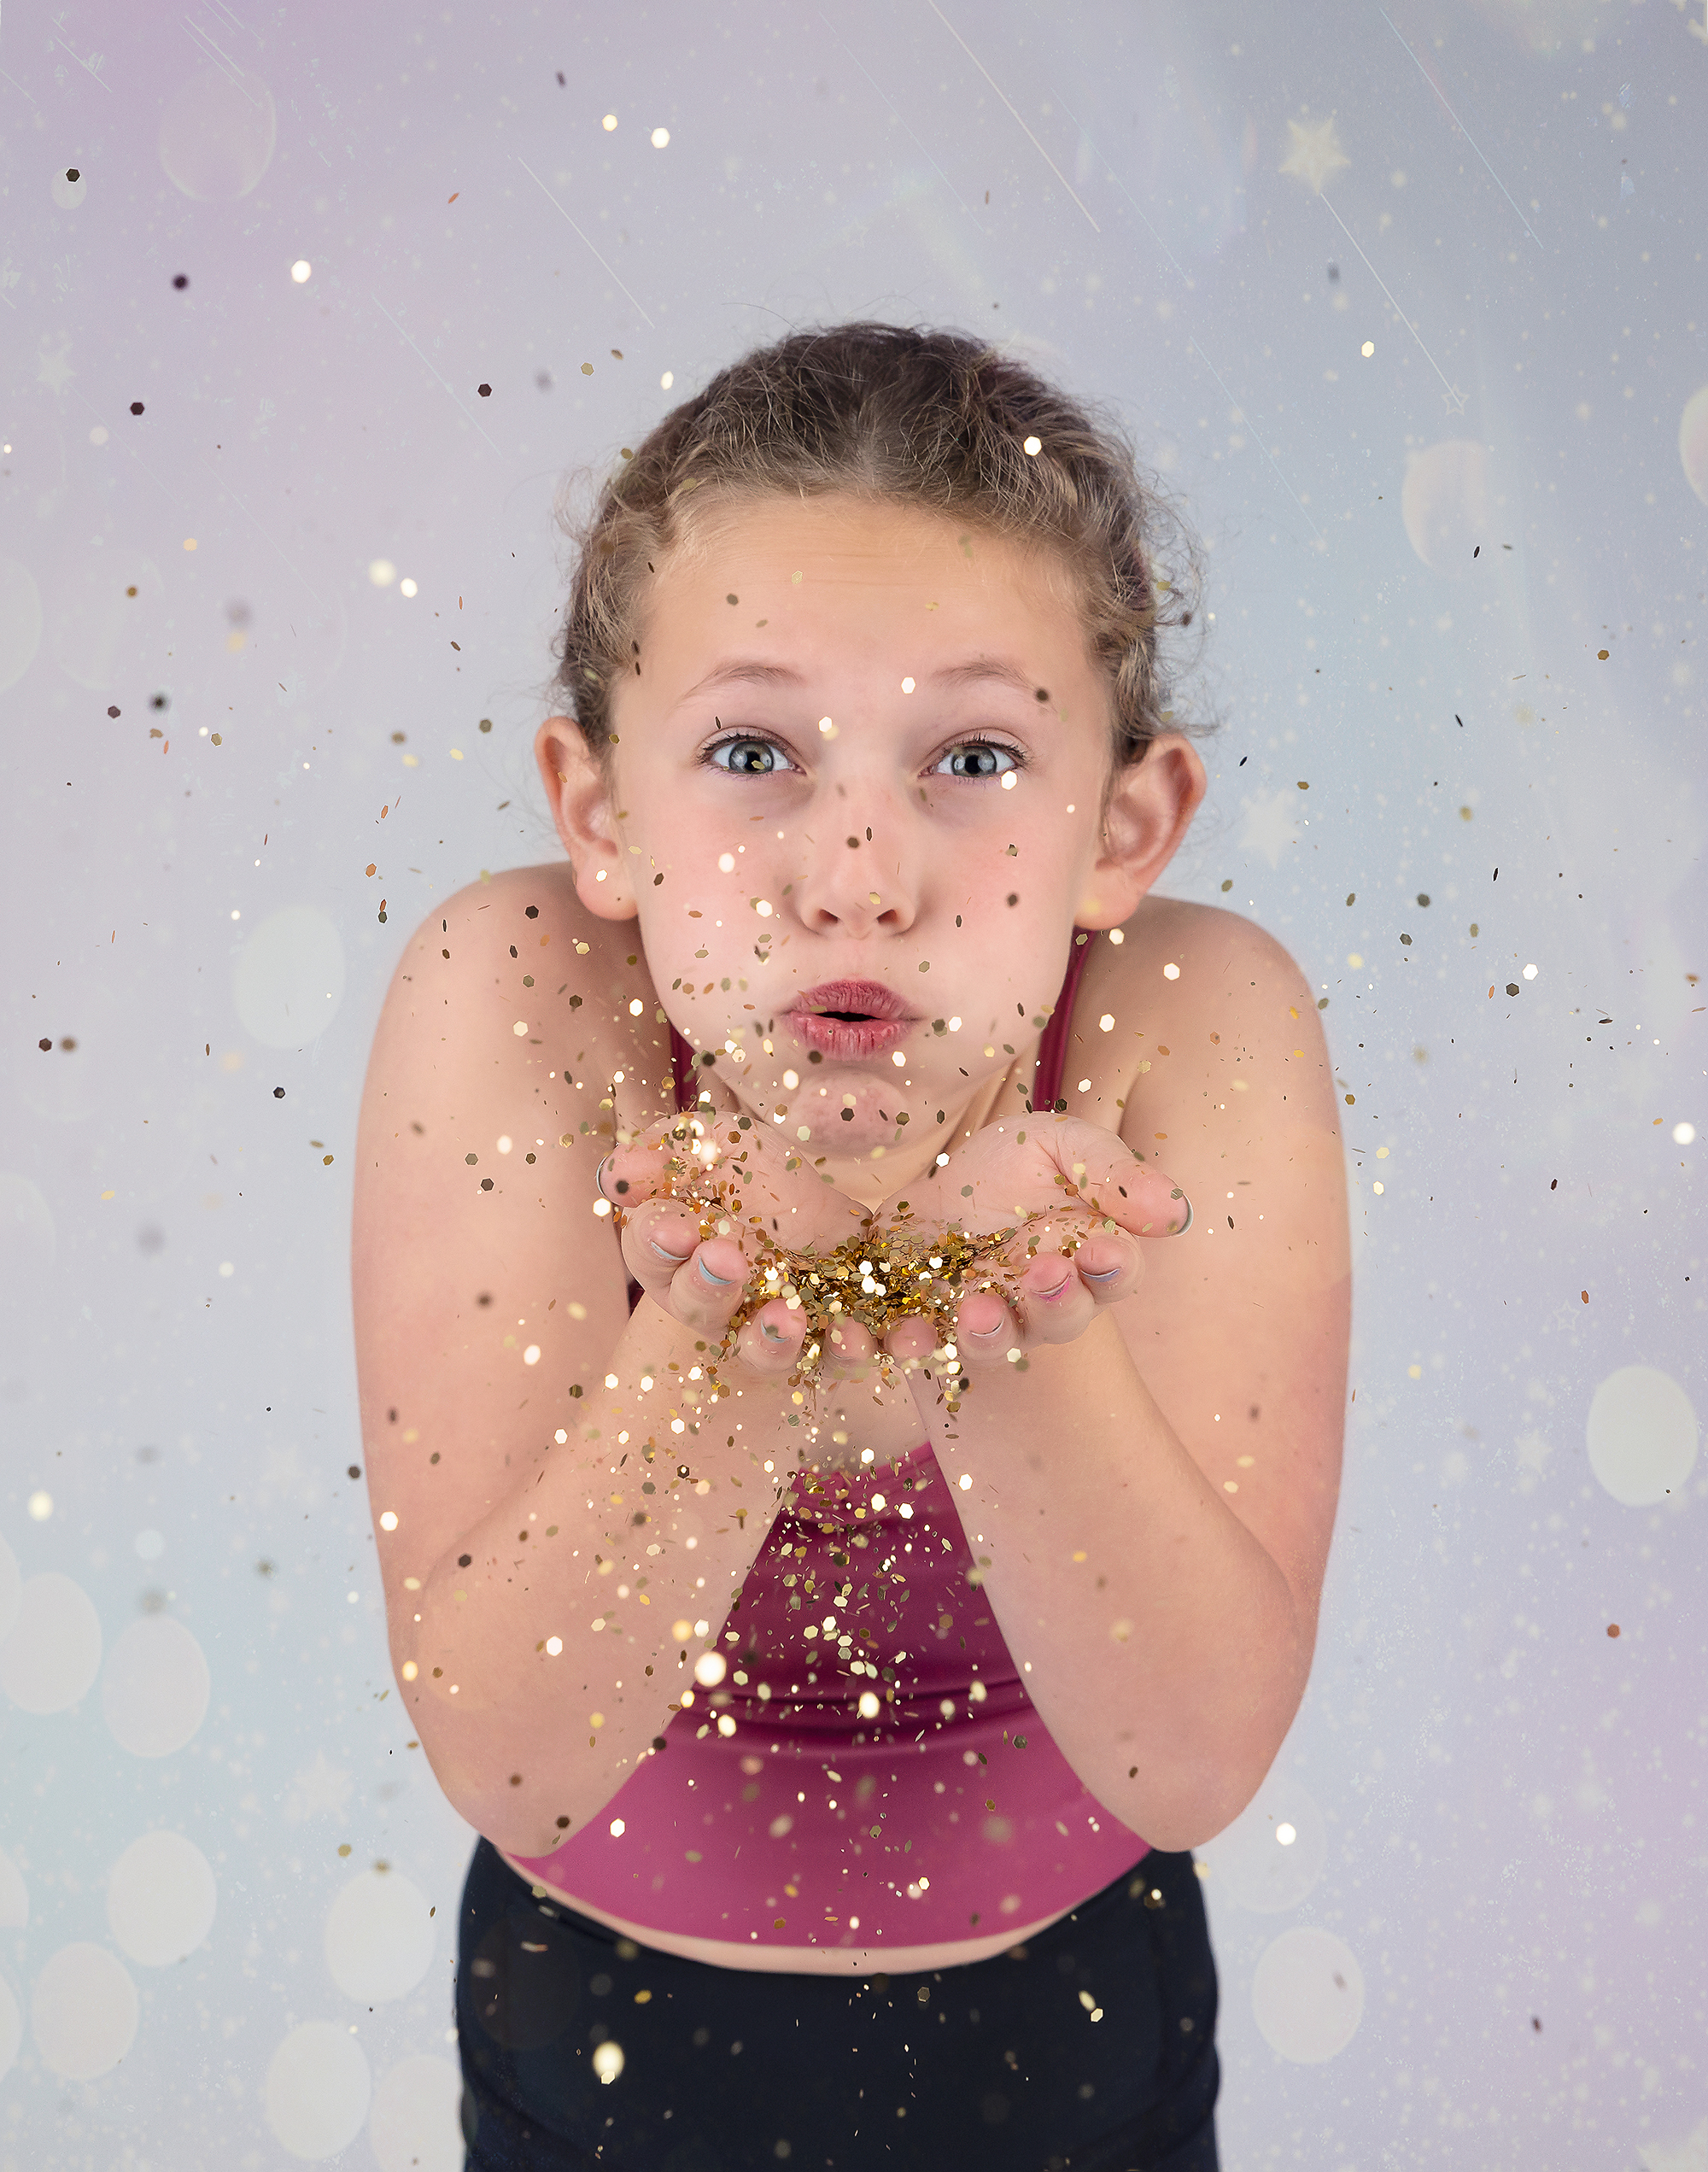 child blowing gold glitter portrait